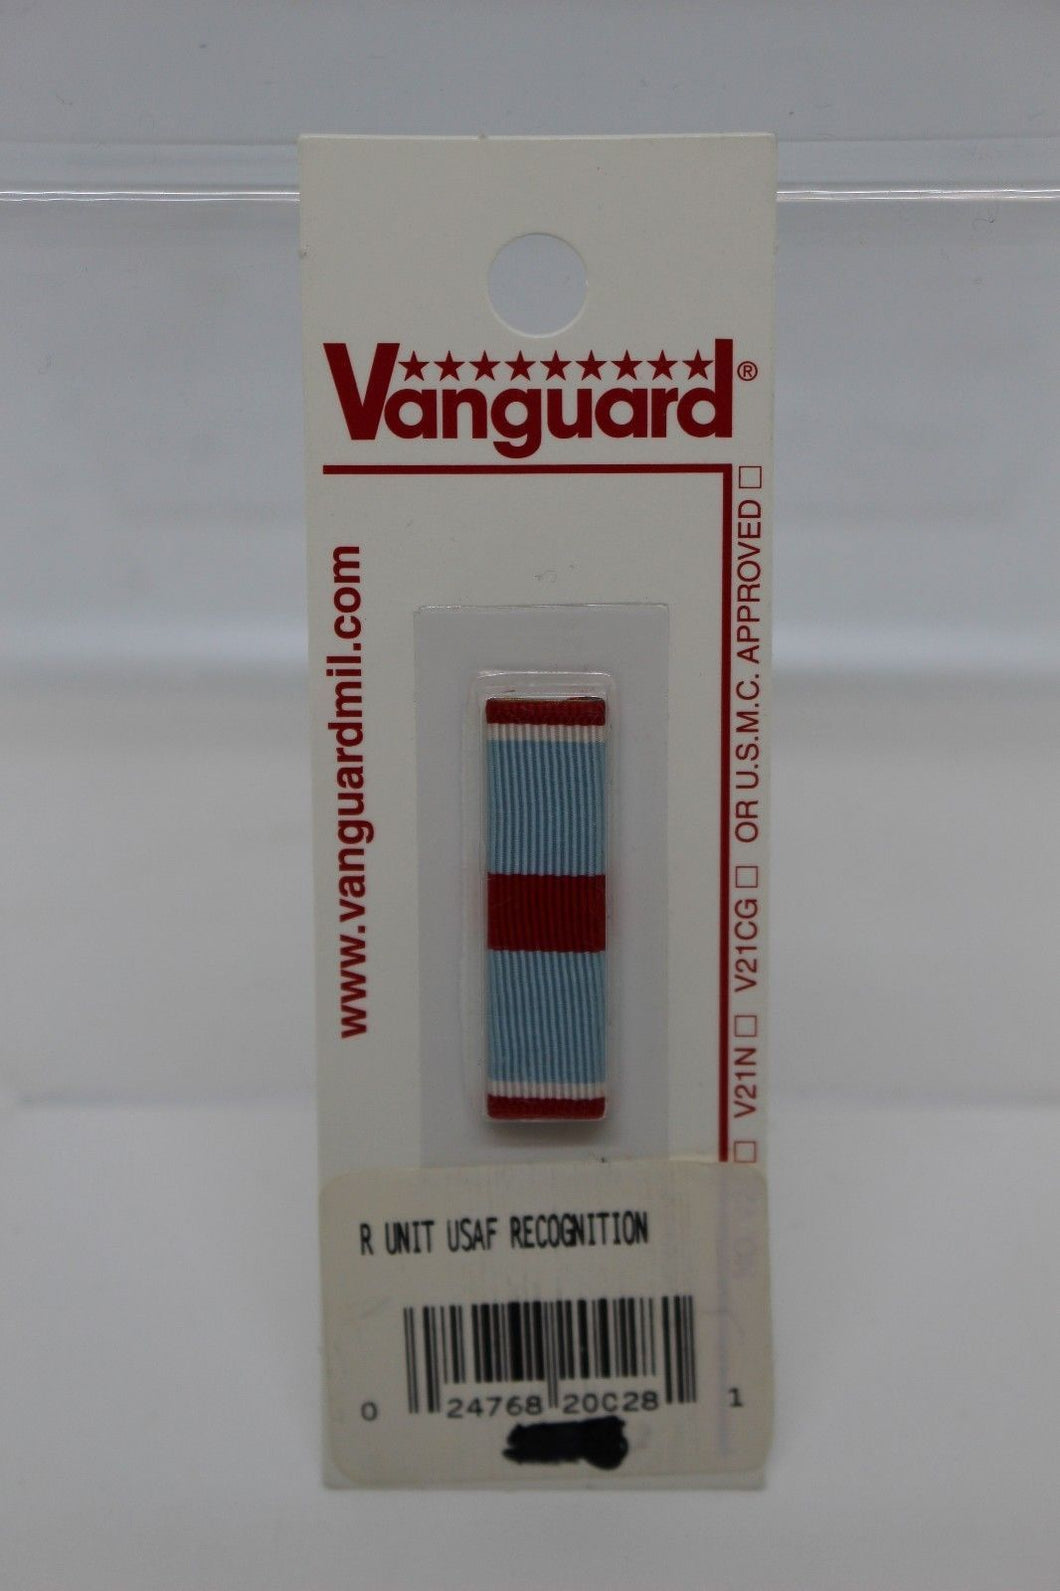 Vanguard R Unit USAF Recognition, NEW!